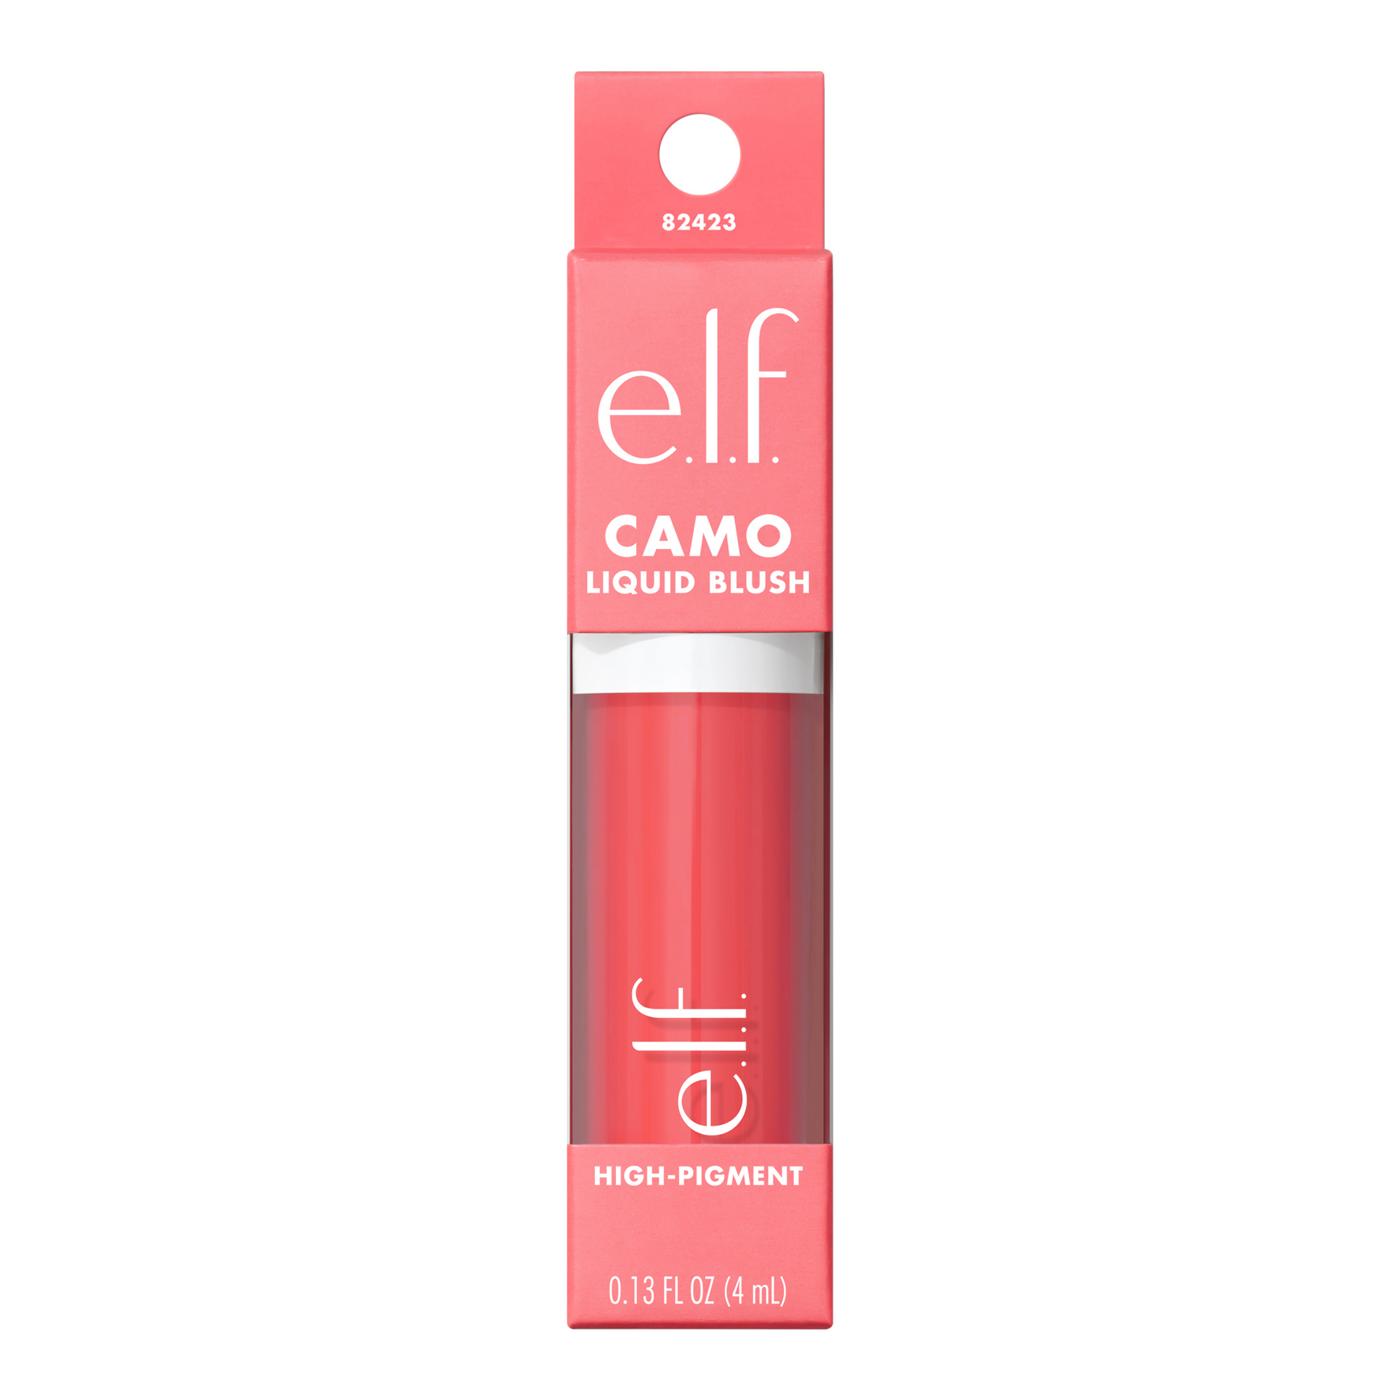 e.l.f. Camo Liquid Blush - Pinky; image 1 of 2